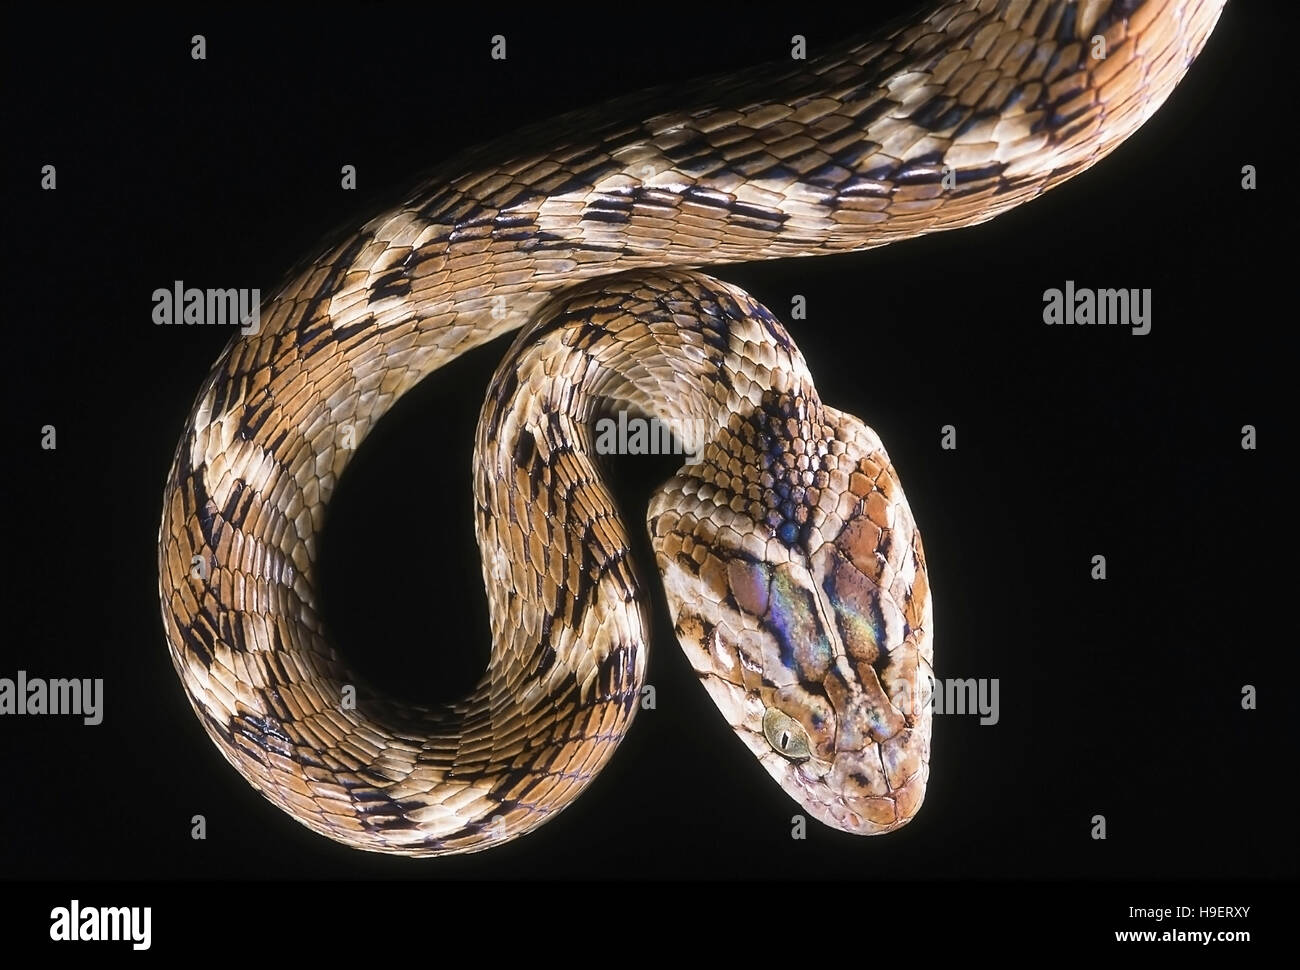 Trigonata CAT INDIEN COMMUN Boiga serpent. CLOSE UP. Semi-venimeux. Photographié près de Pune ( =Poona) Maharashtra, Inde. Banque D'Images